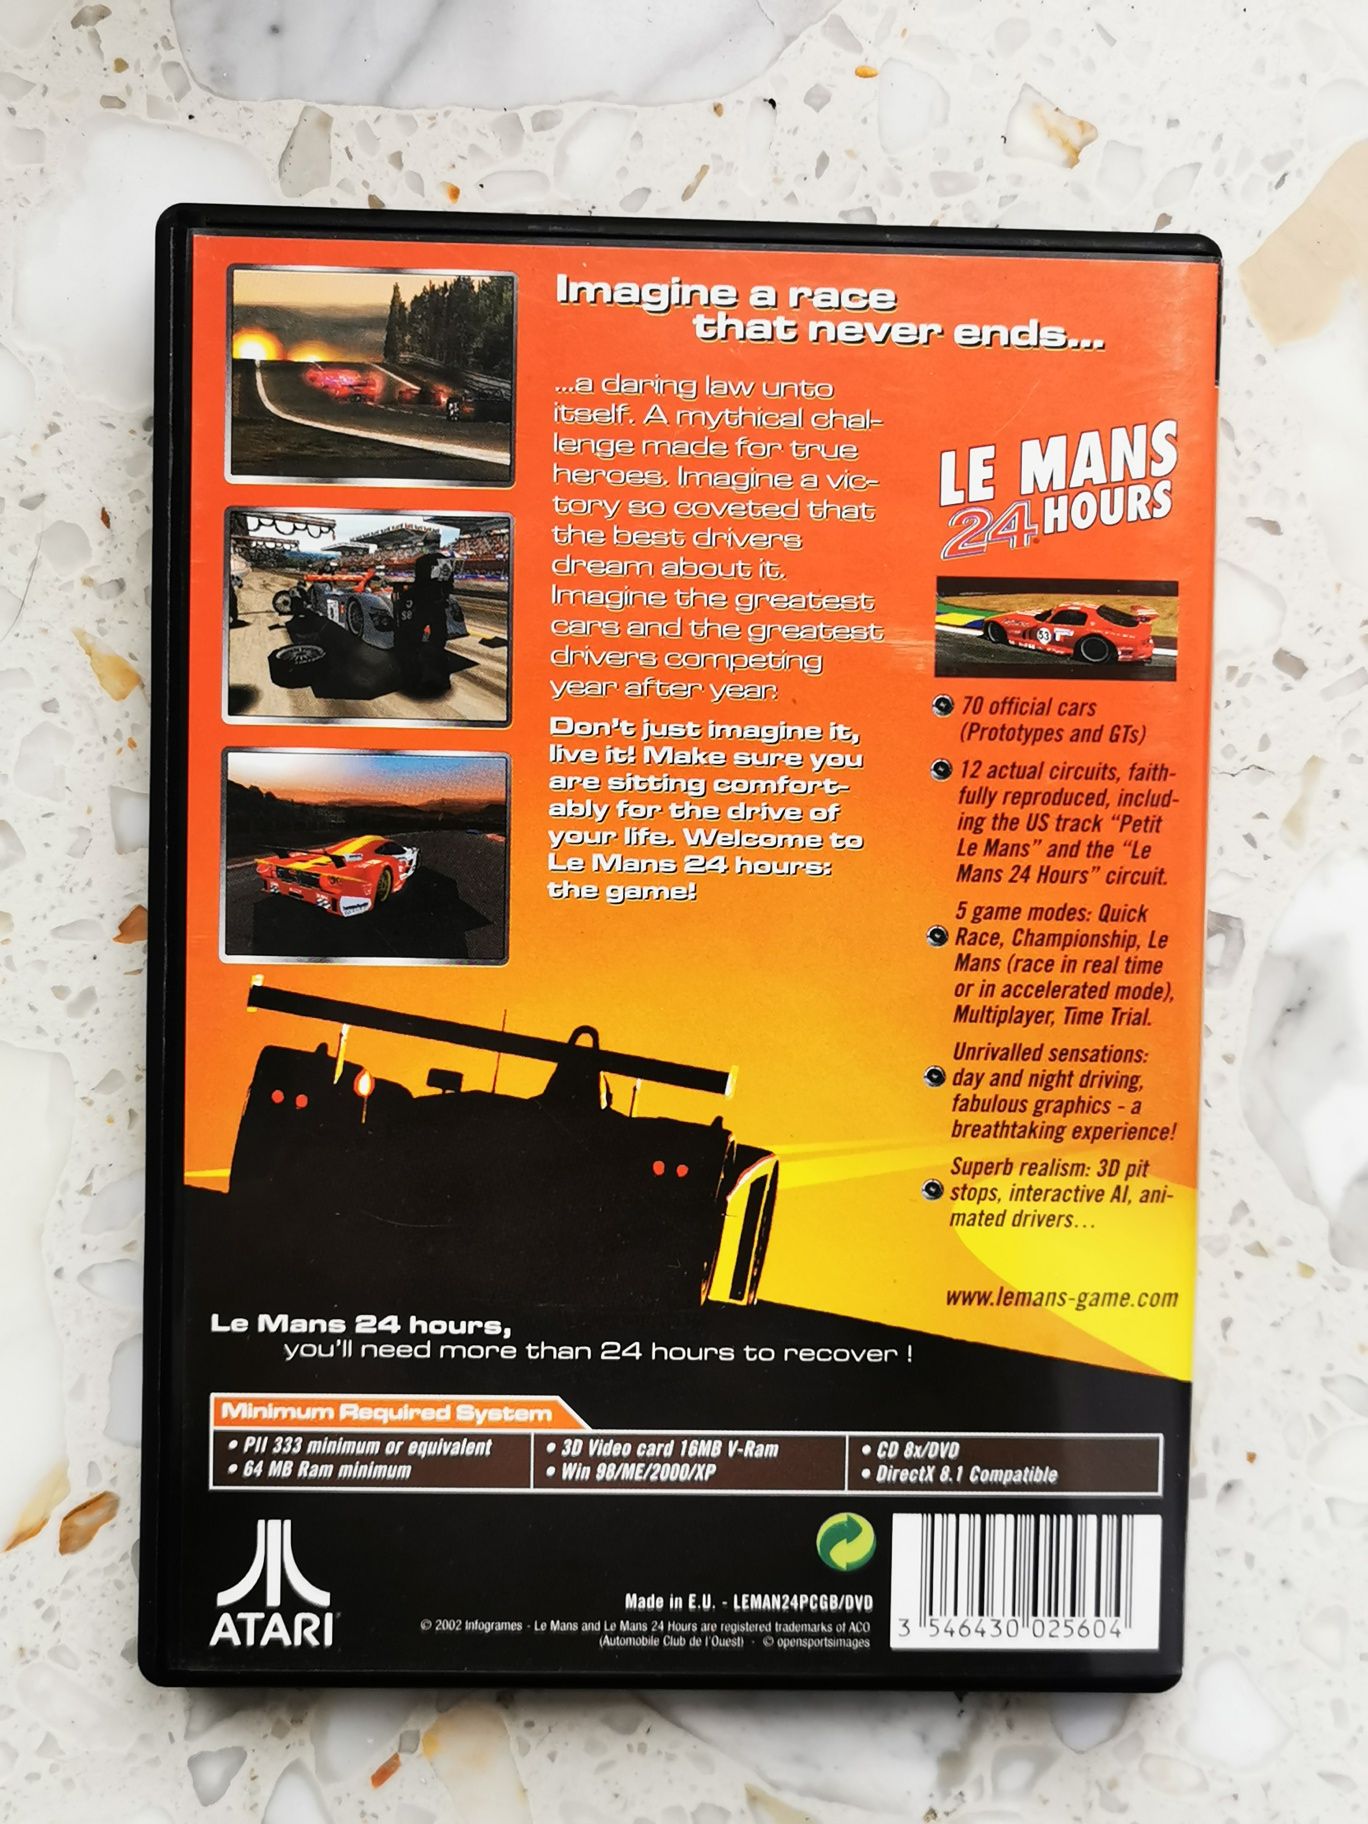 Le Mans 24 hours PC Atari wydanie angielskie kompletne UNIKAT